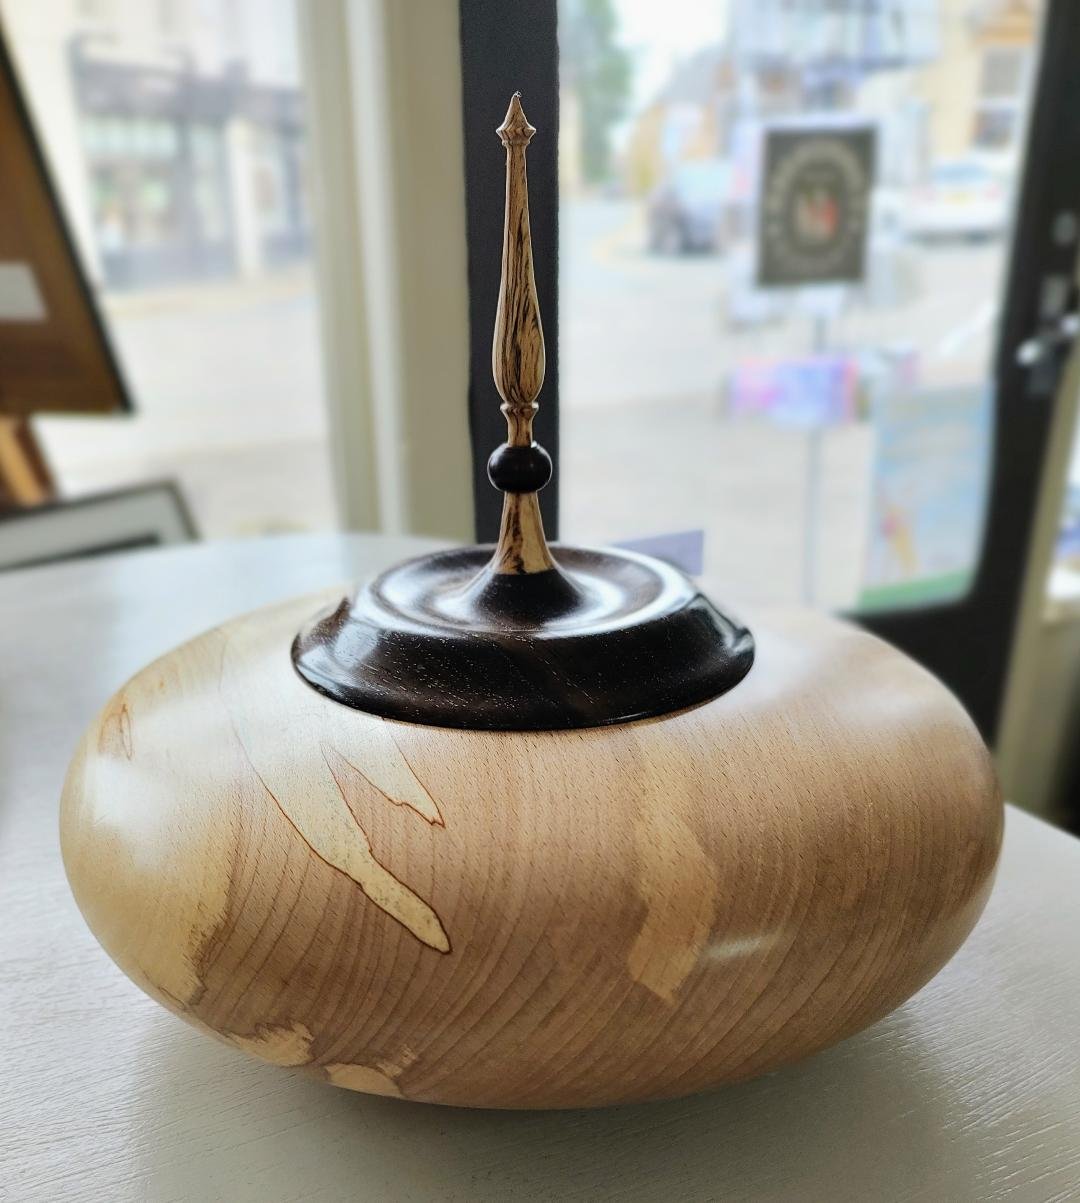 Andy Harris- Turned Wooden Arabian Style Ldded Bowl